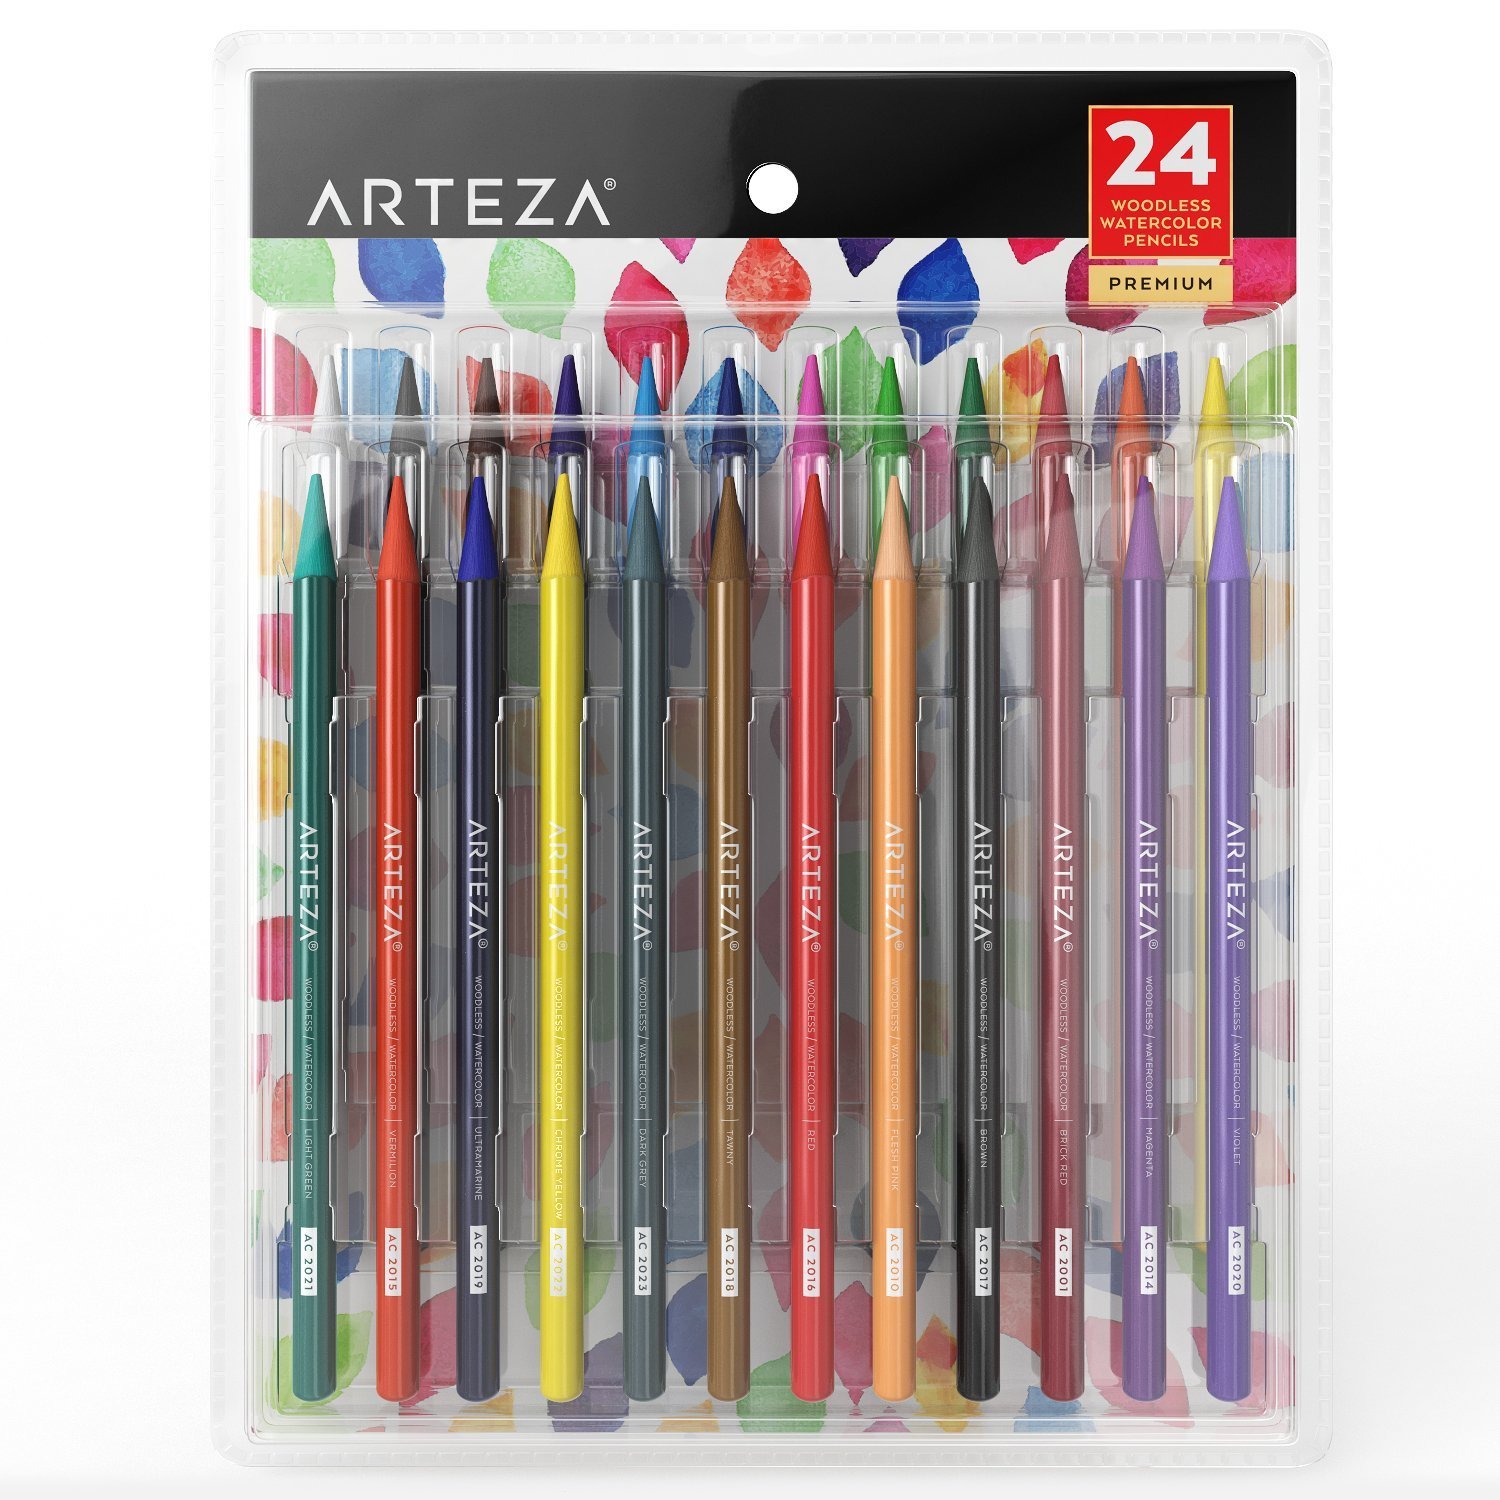 Arteza High-Density Woodless Watercolor Pencil Set, 24-Count